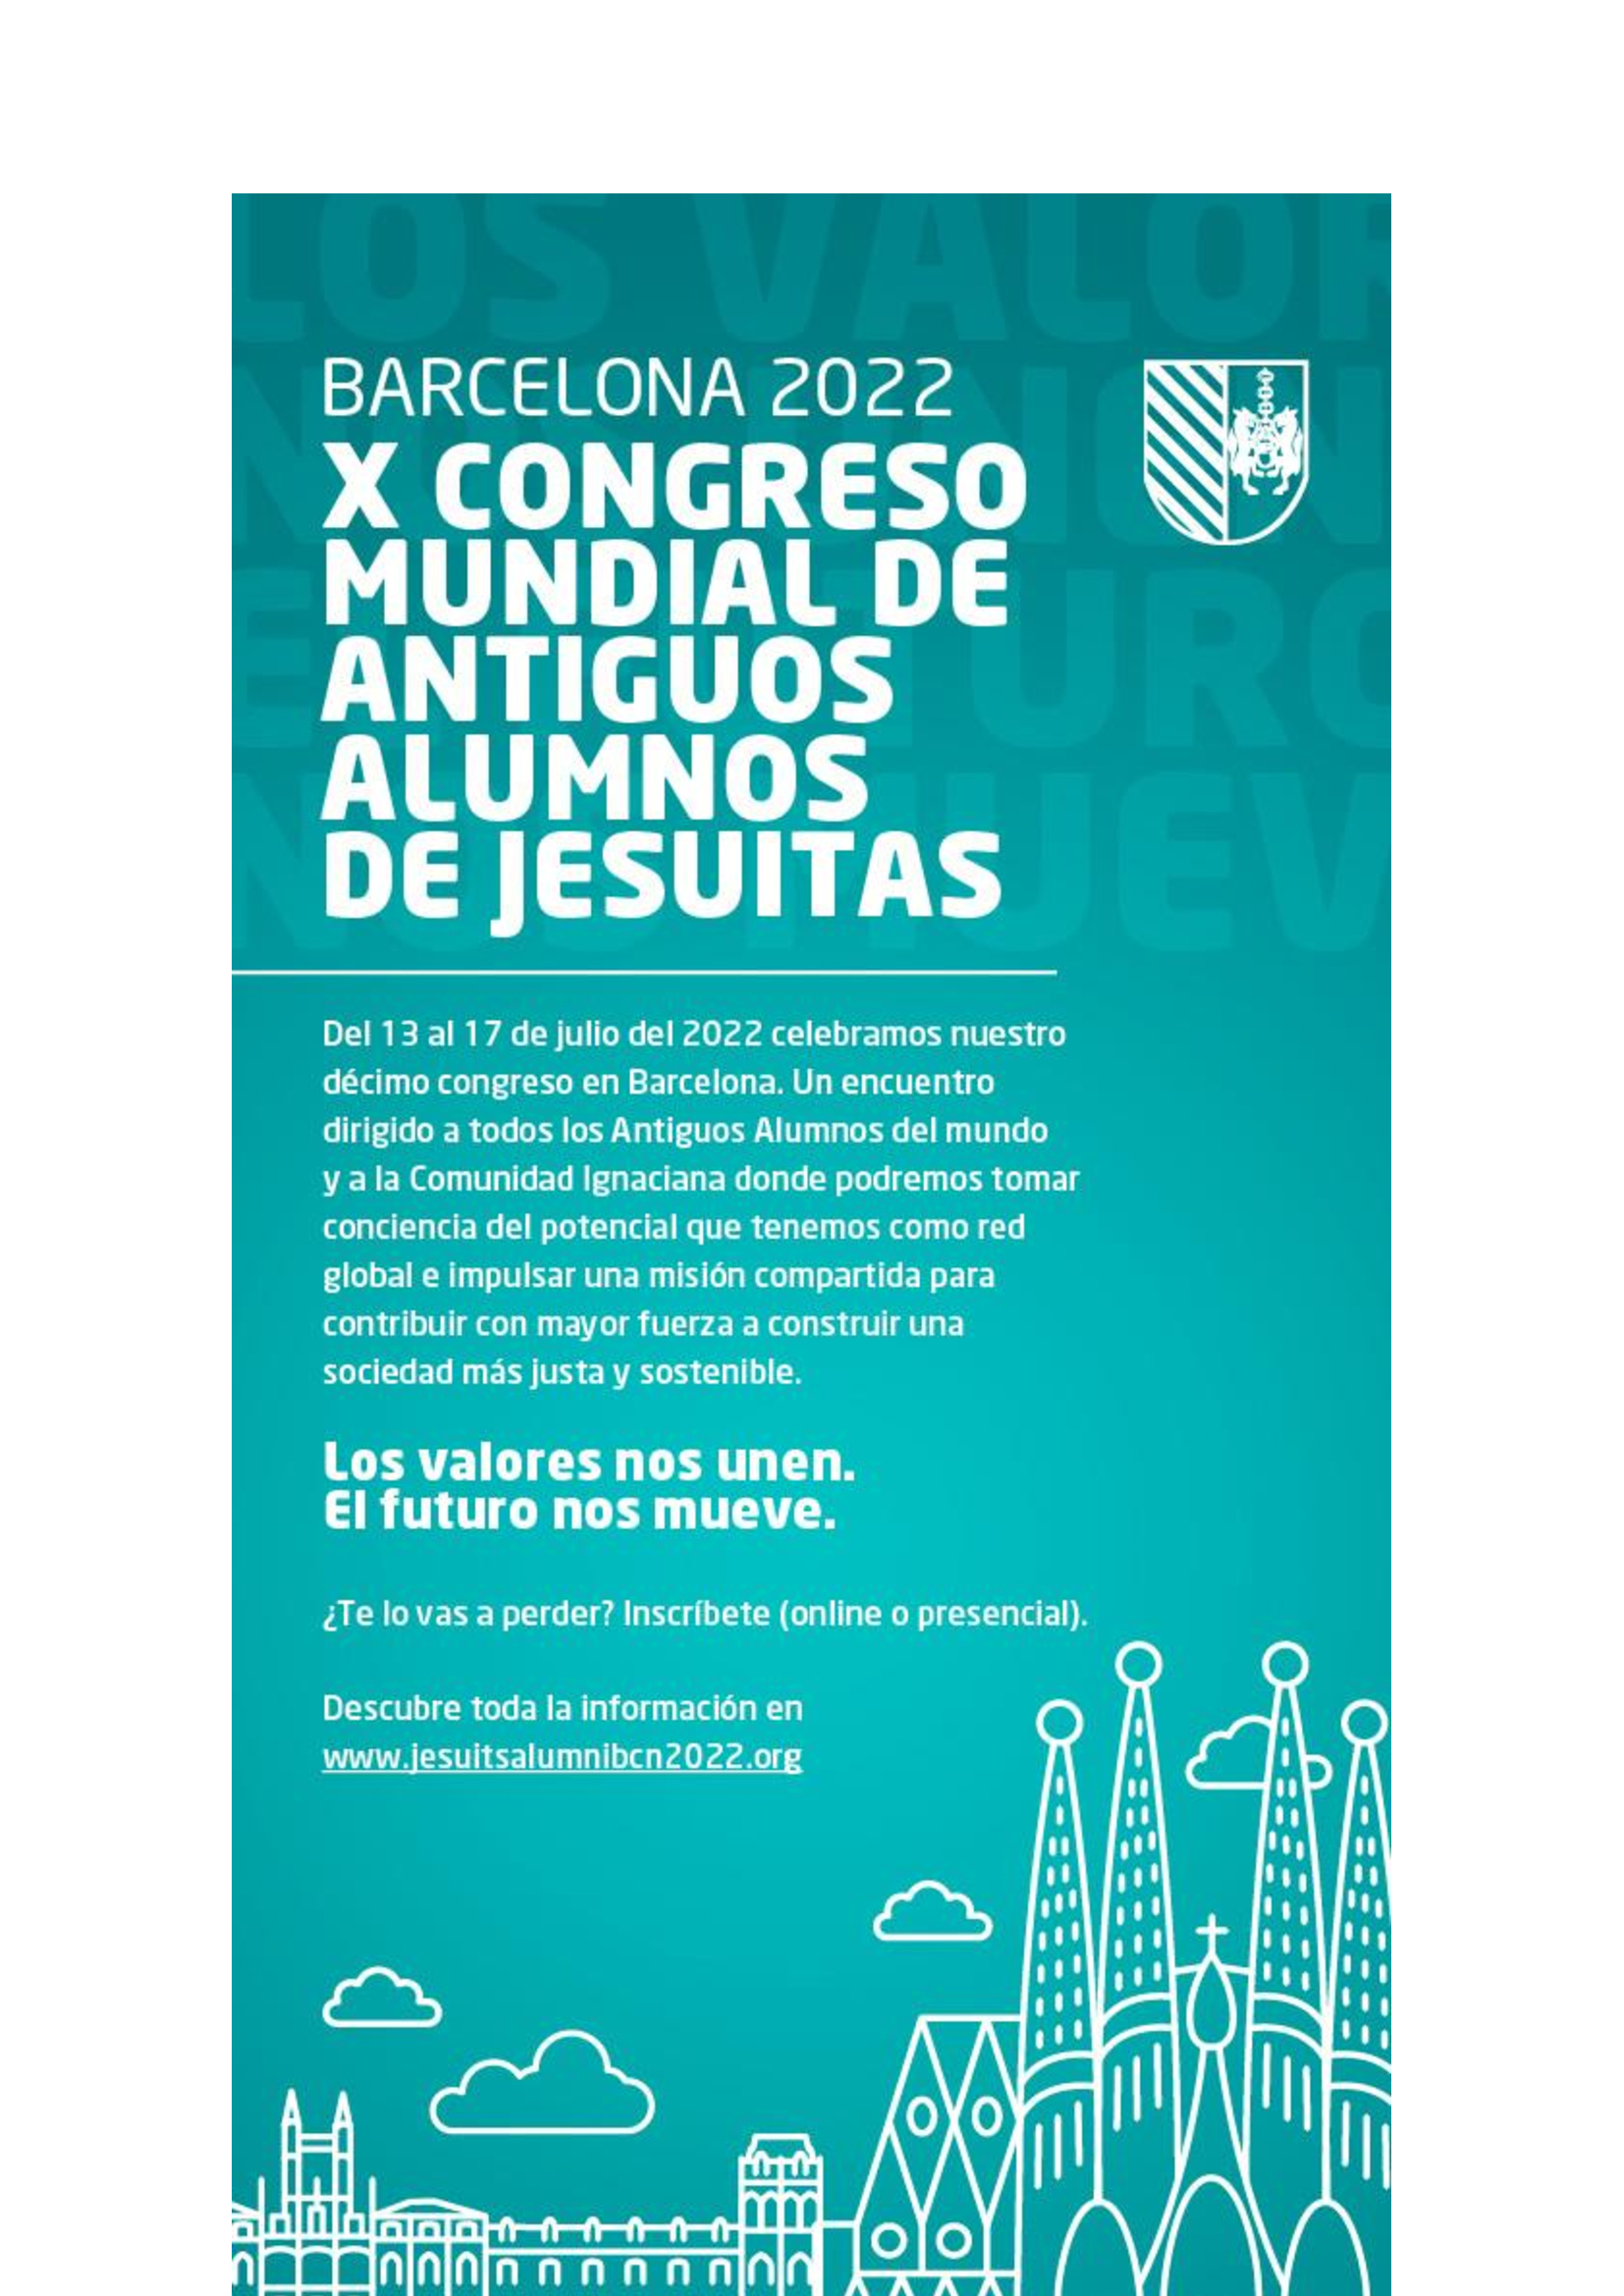 x-congreso-mundial-antiguos-alumnos-jesuitas-barcelona-2022